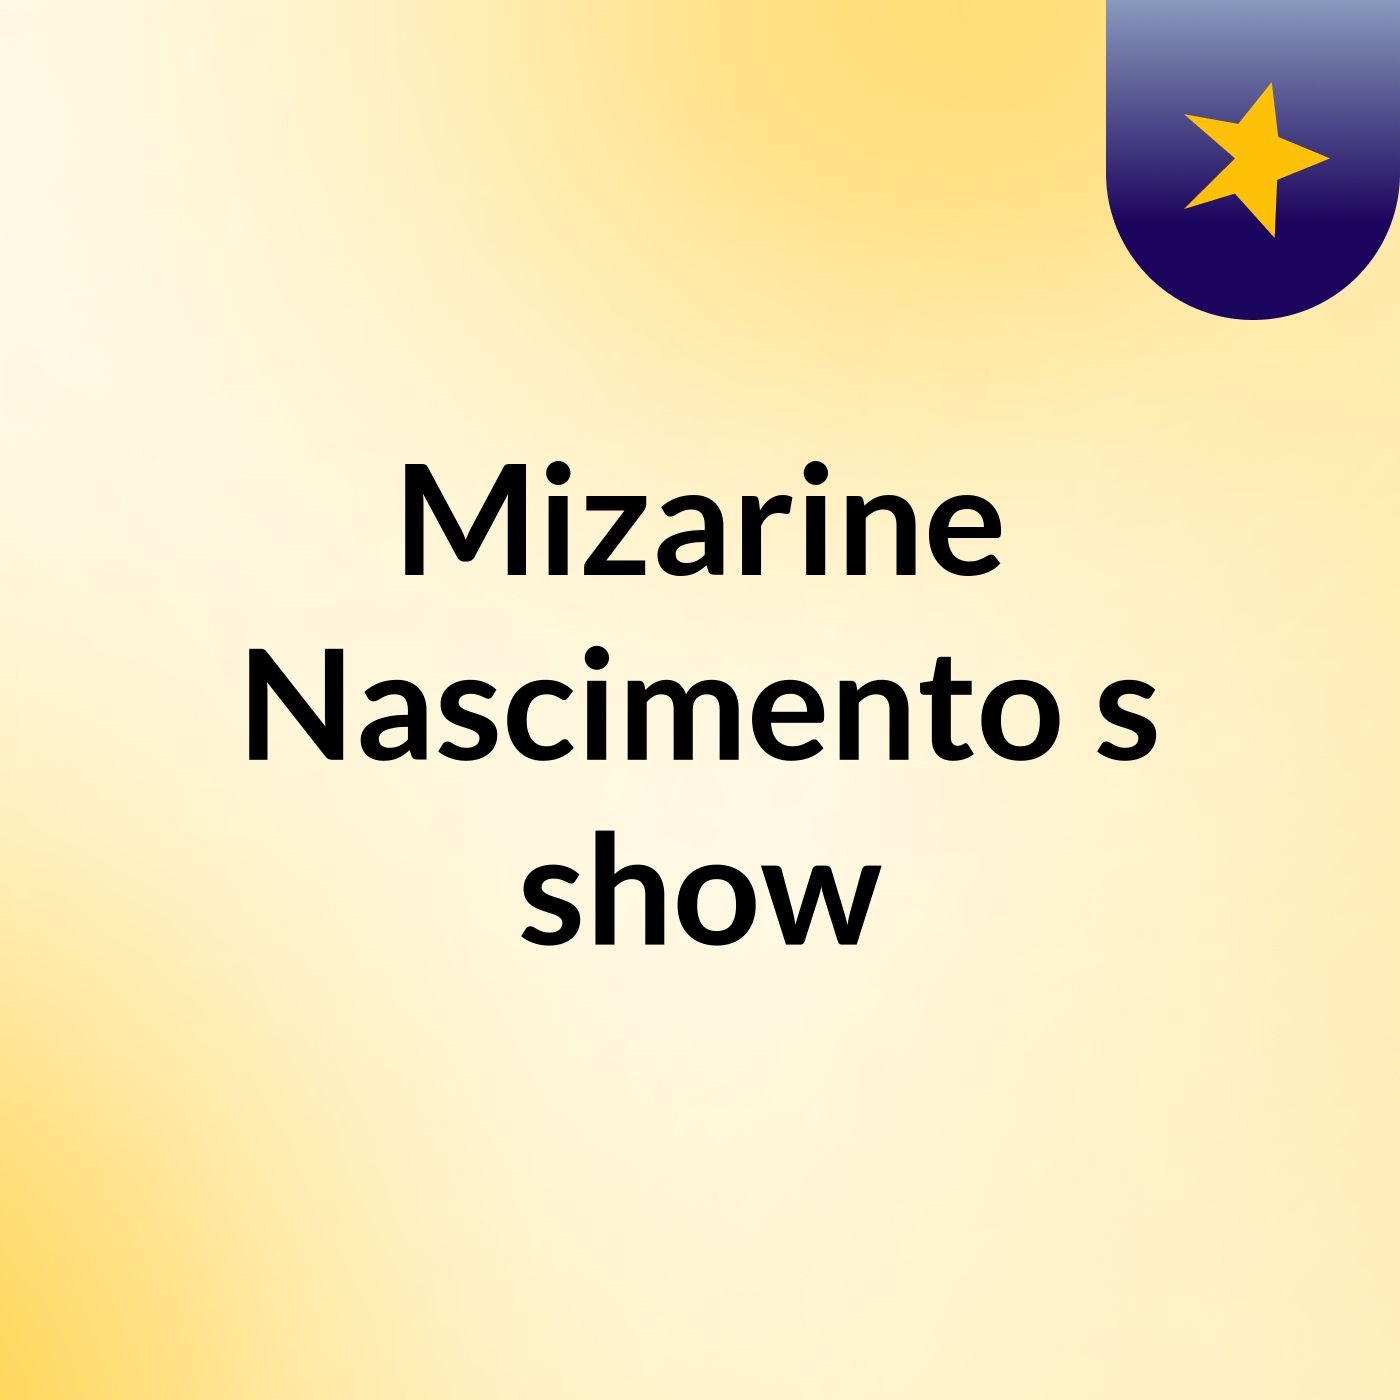 Mizarine Nascimento's show